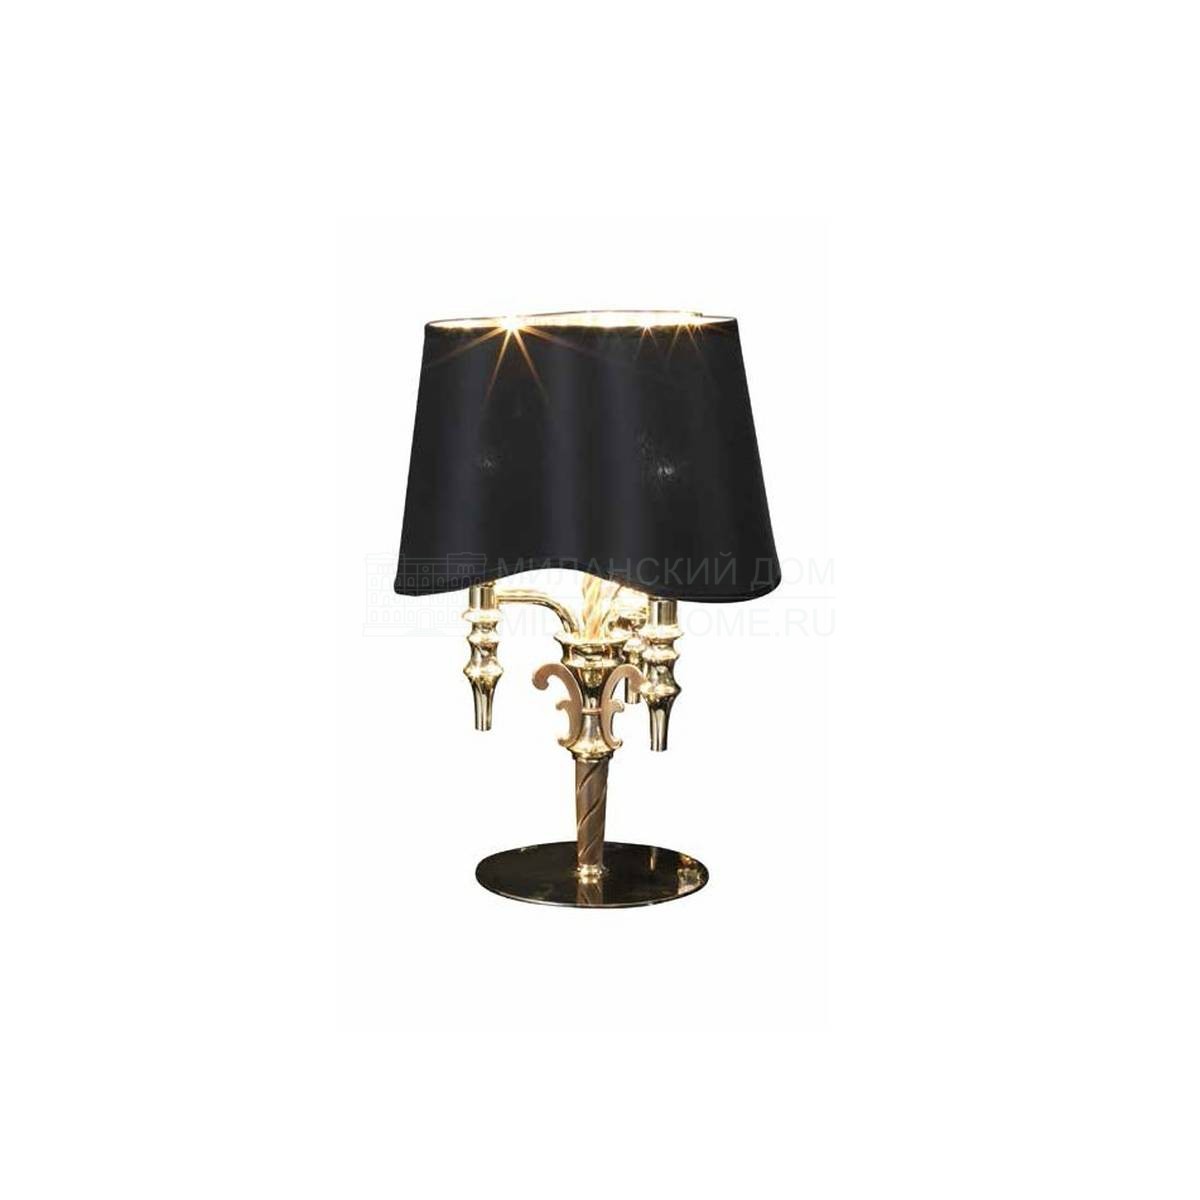 Настольная лампа Amarilli из Италии фабрики IPE CAVALLI VISIONNAIRE